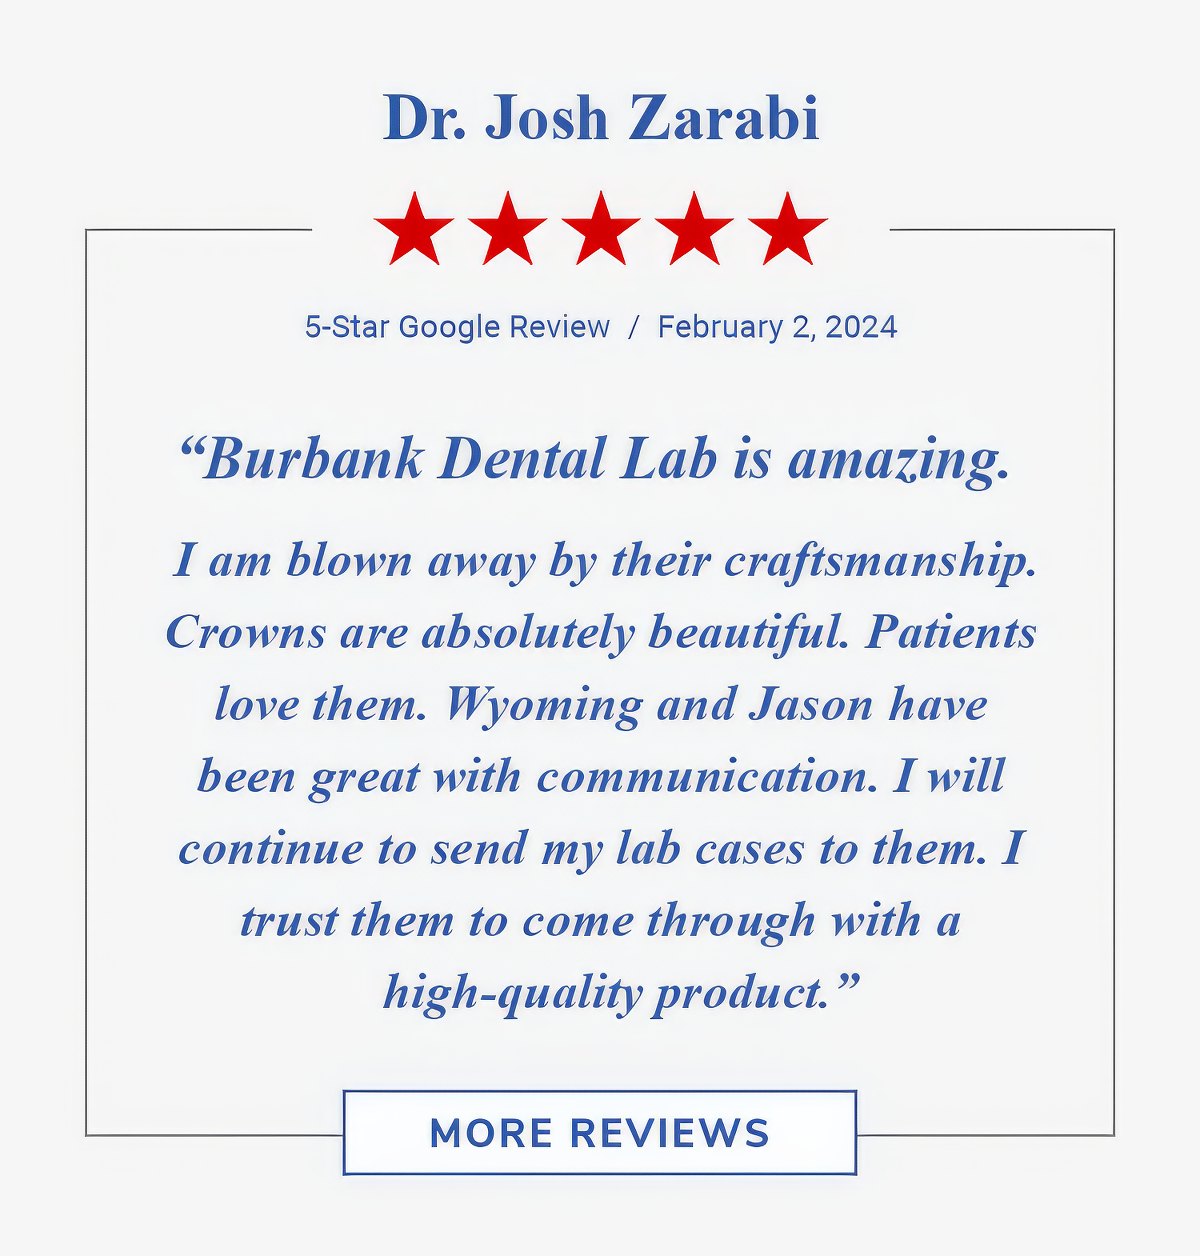 Google 5-Star Review for Burbank Dental Lab by Dr. Josh Zarabi